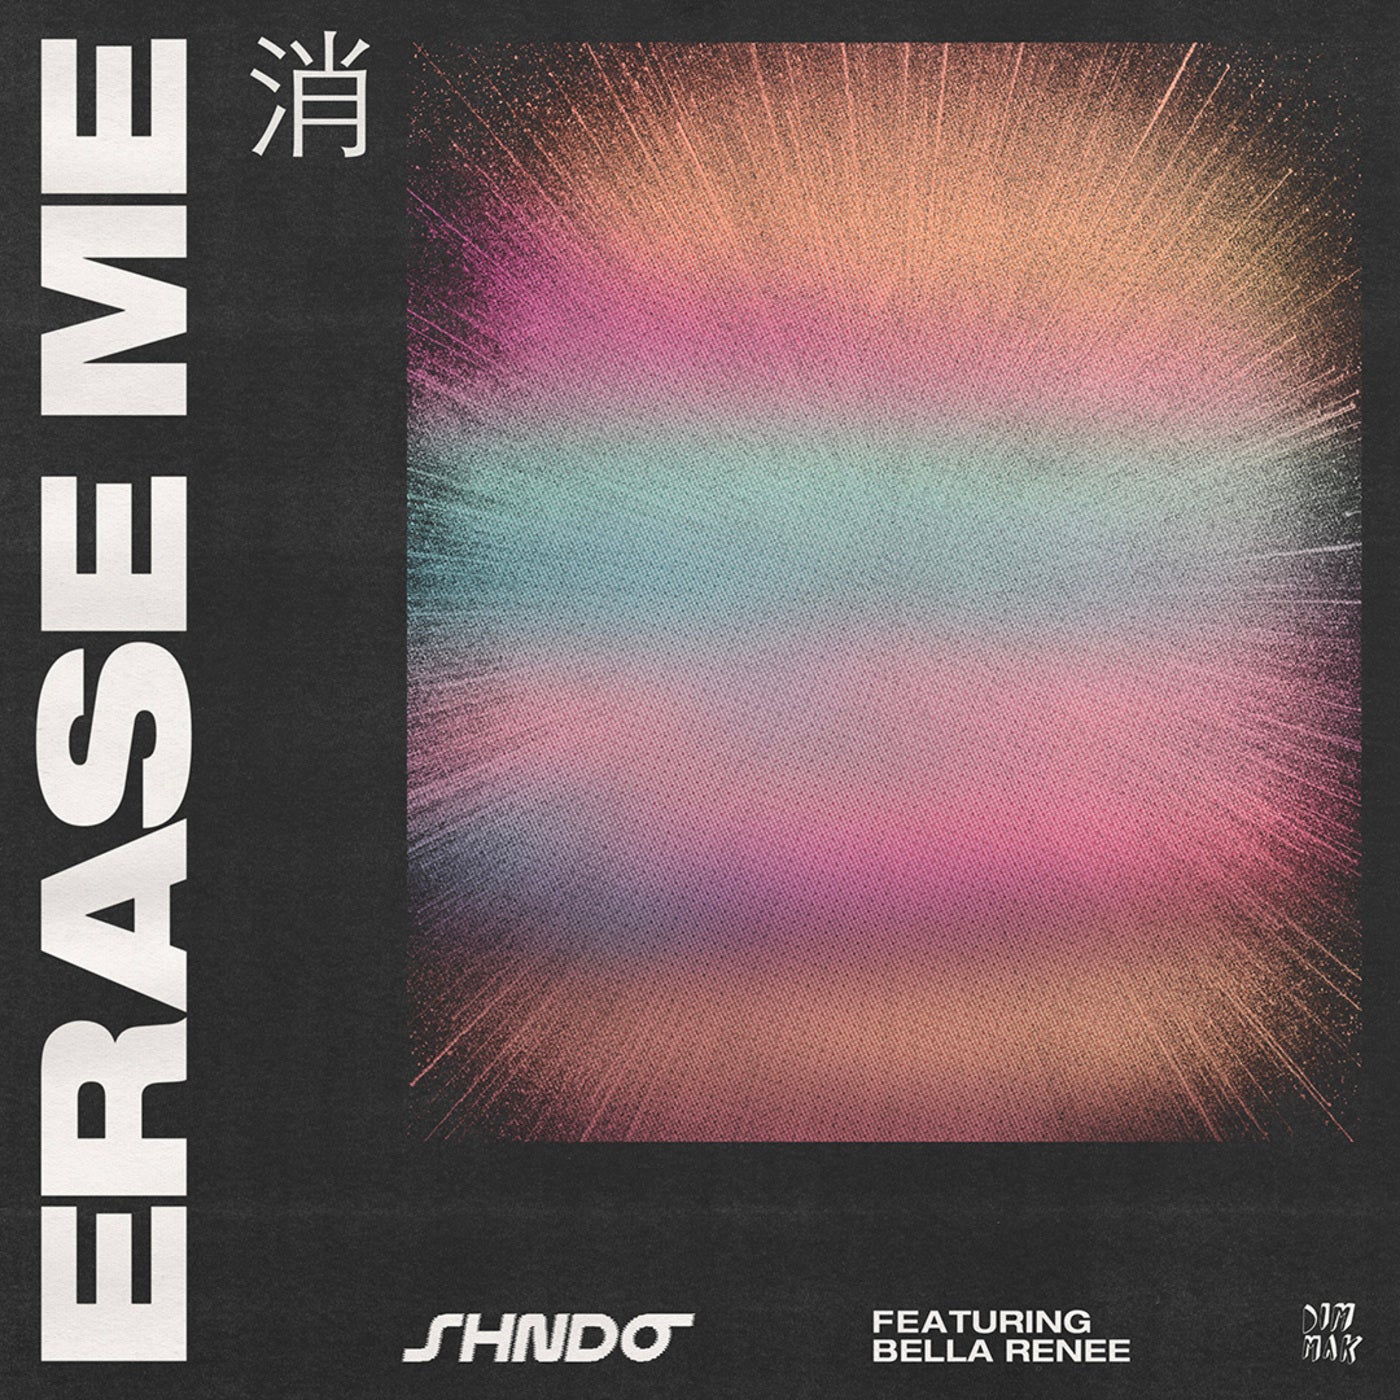 Shndo - Erase Me (feat. Bella Renee) [Dim Mak Records] | Music 